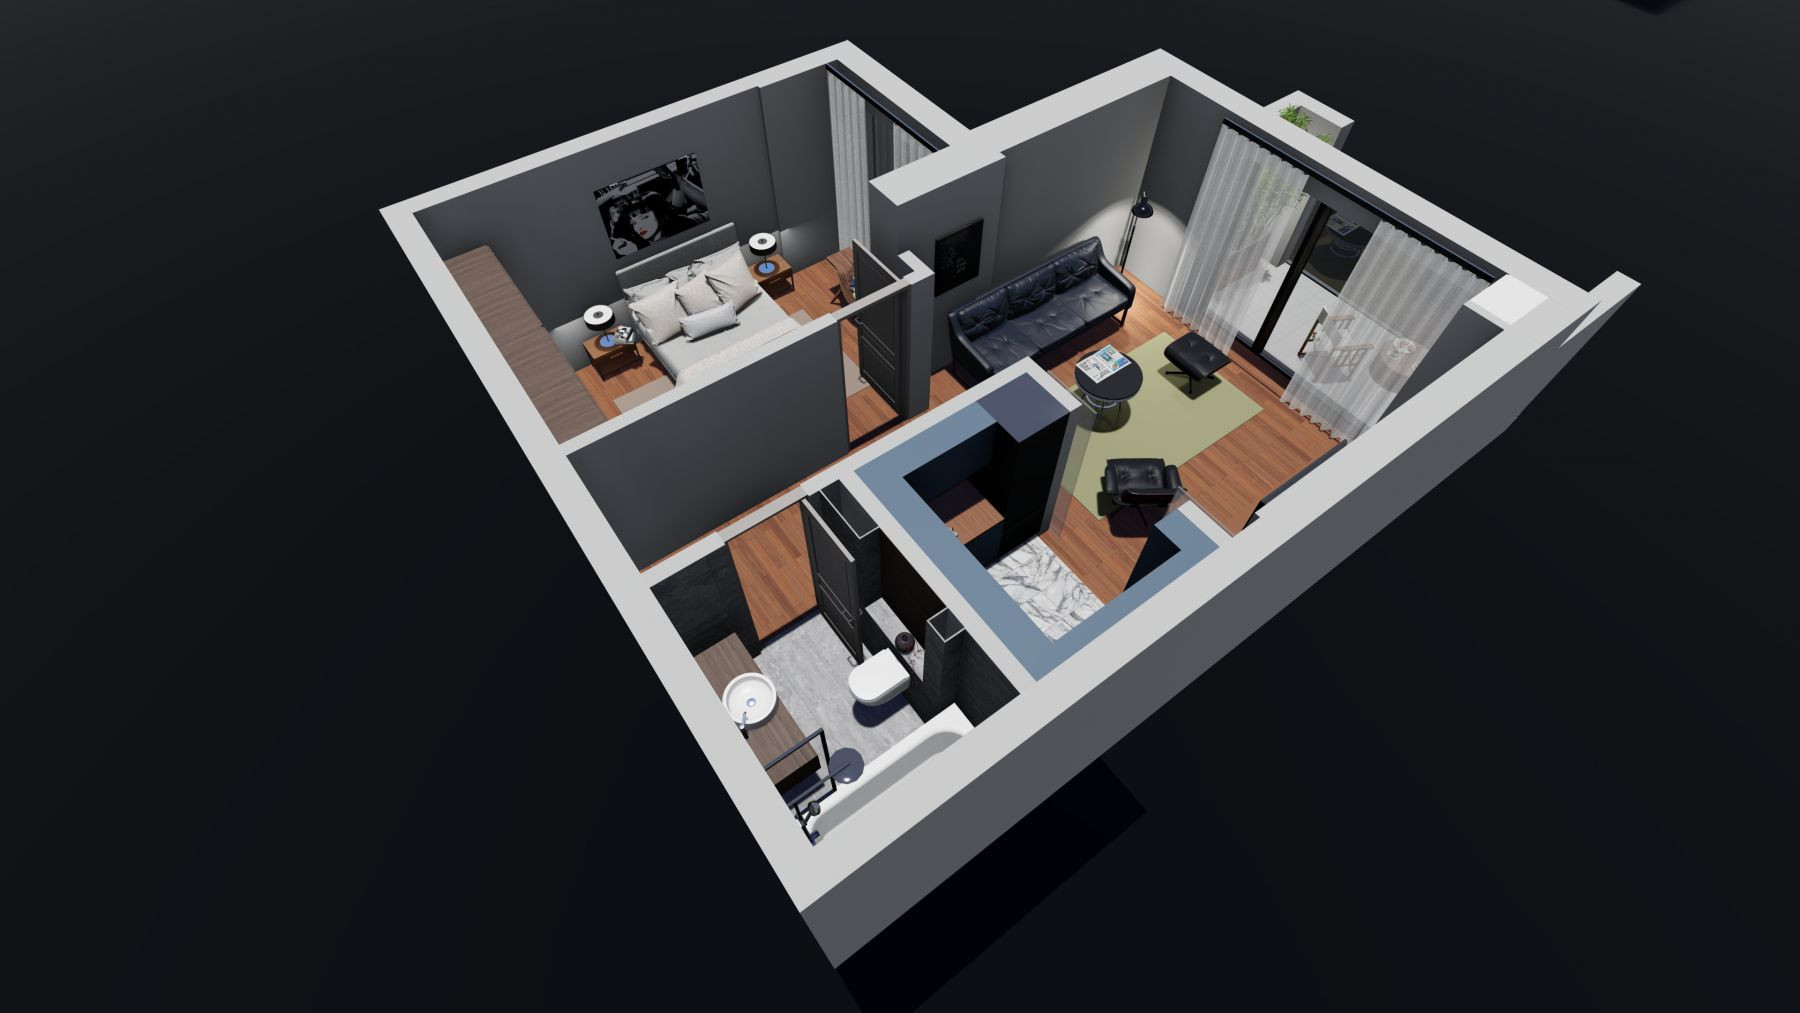 Apartamente - Str Justitiei 57 - Smart Home Compartimentari Inteligente  8